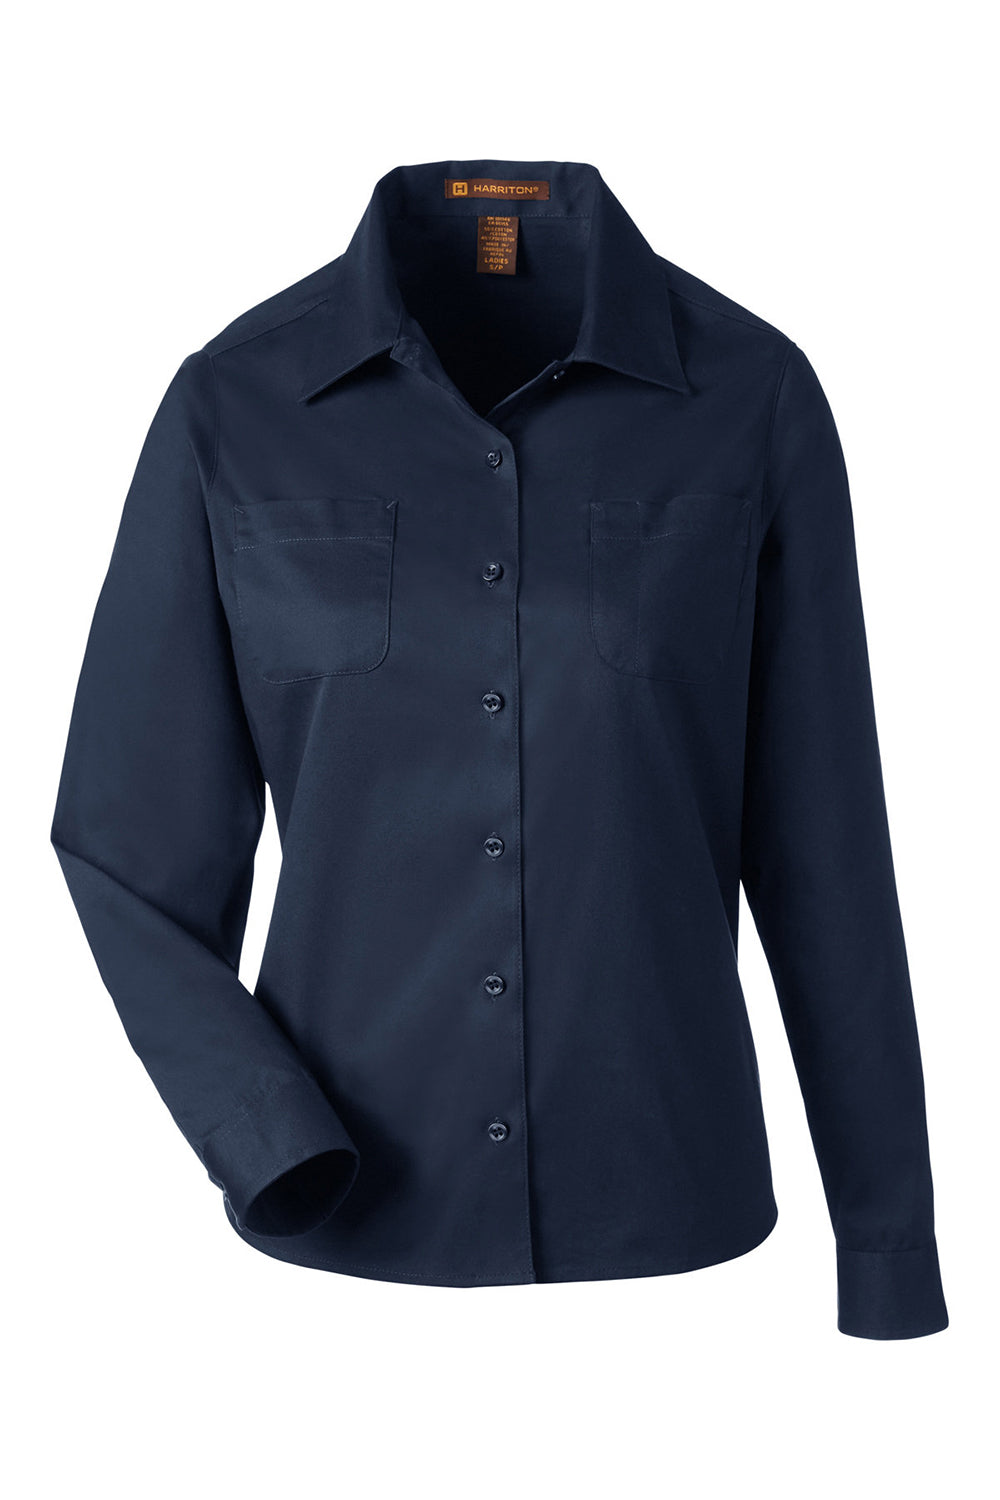 Harriton M585LW Womens Advantage Long Sleeve Button Down Shirt w/ Double Pockets Dark Navy Blue Flat Front